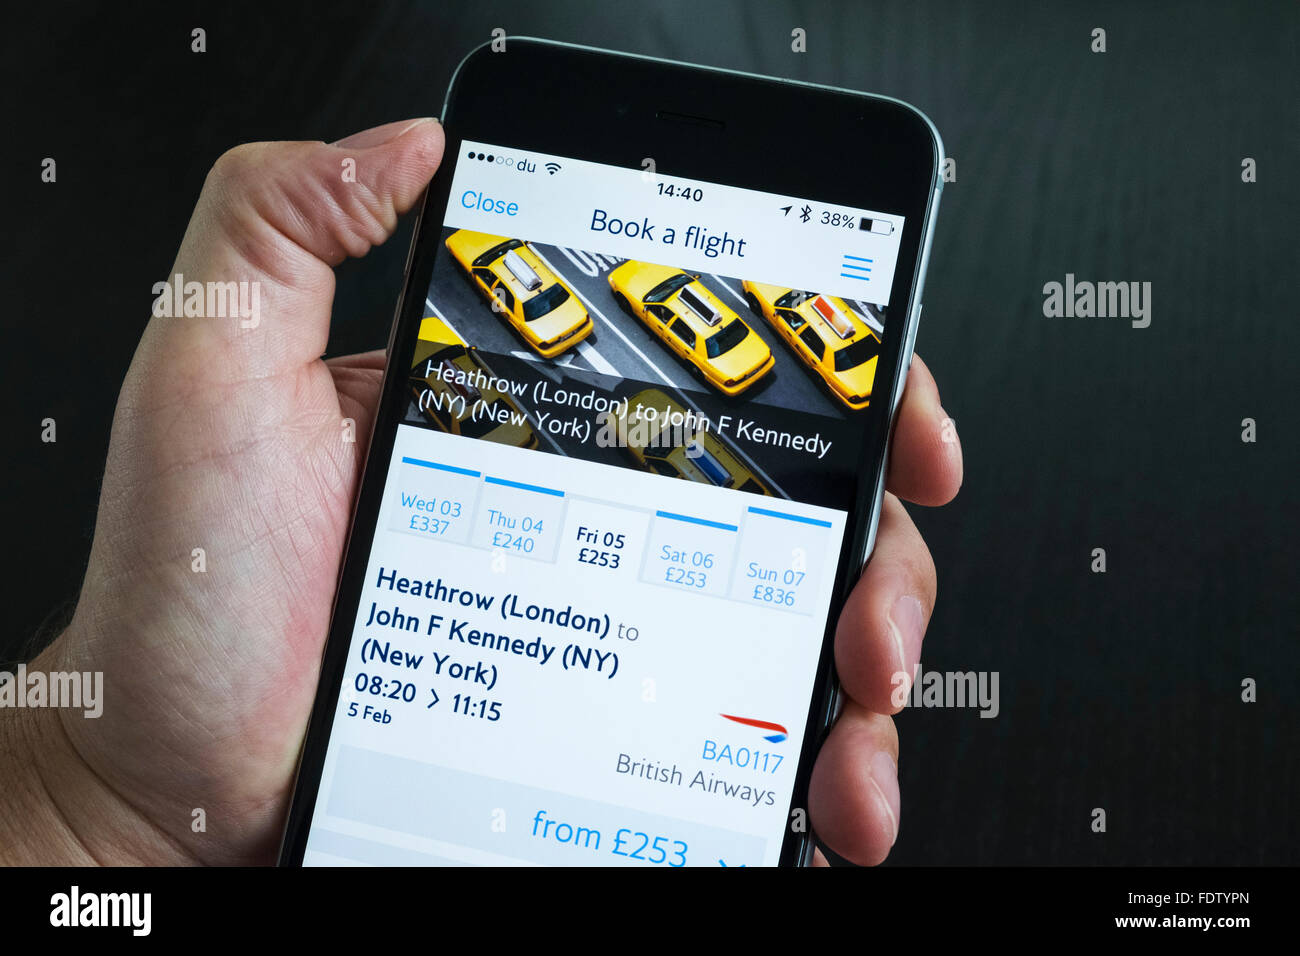 British Airways flight booking app on an iPhone 6 Plus smart phone Stock Photo